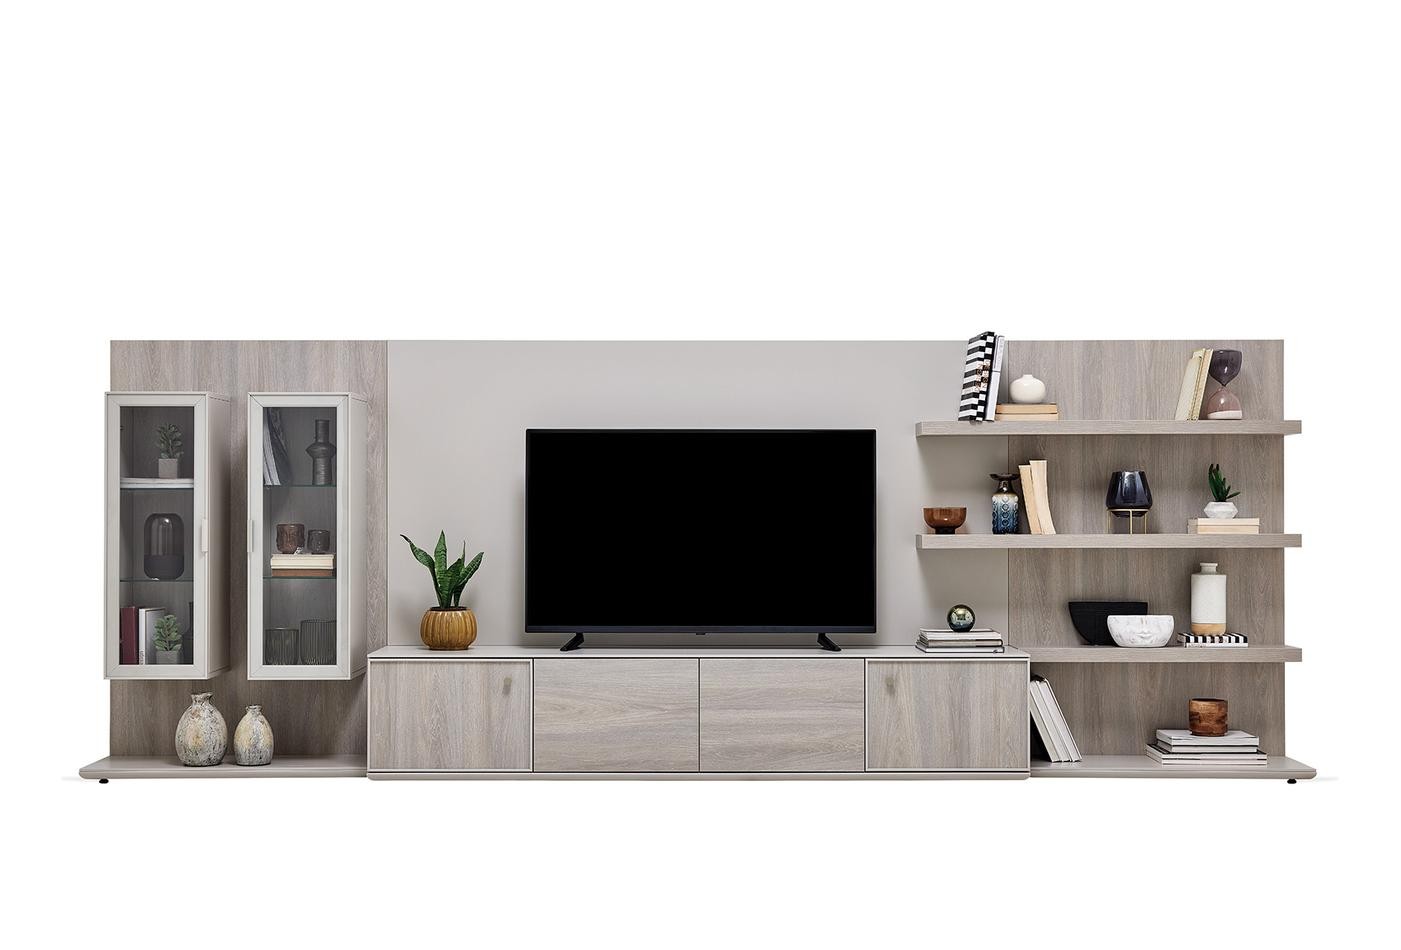 Enza Home Basel, TV Ünitesi Kombinasyonu 4, 383x141 cm (GxY)